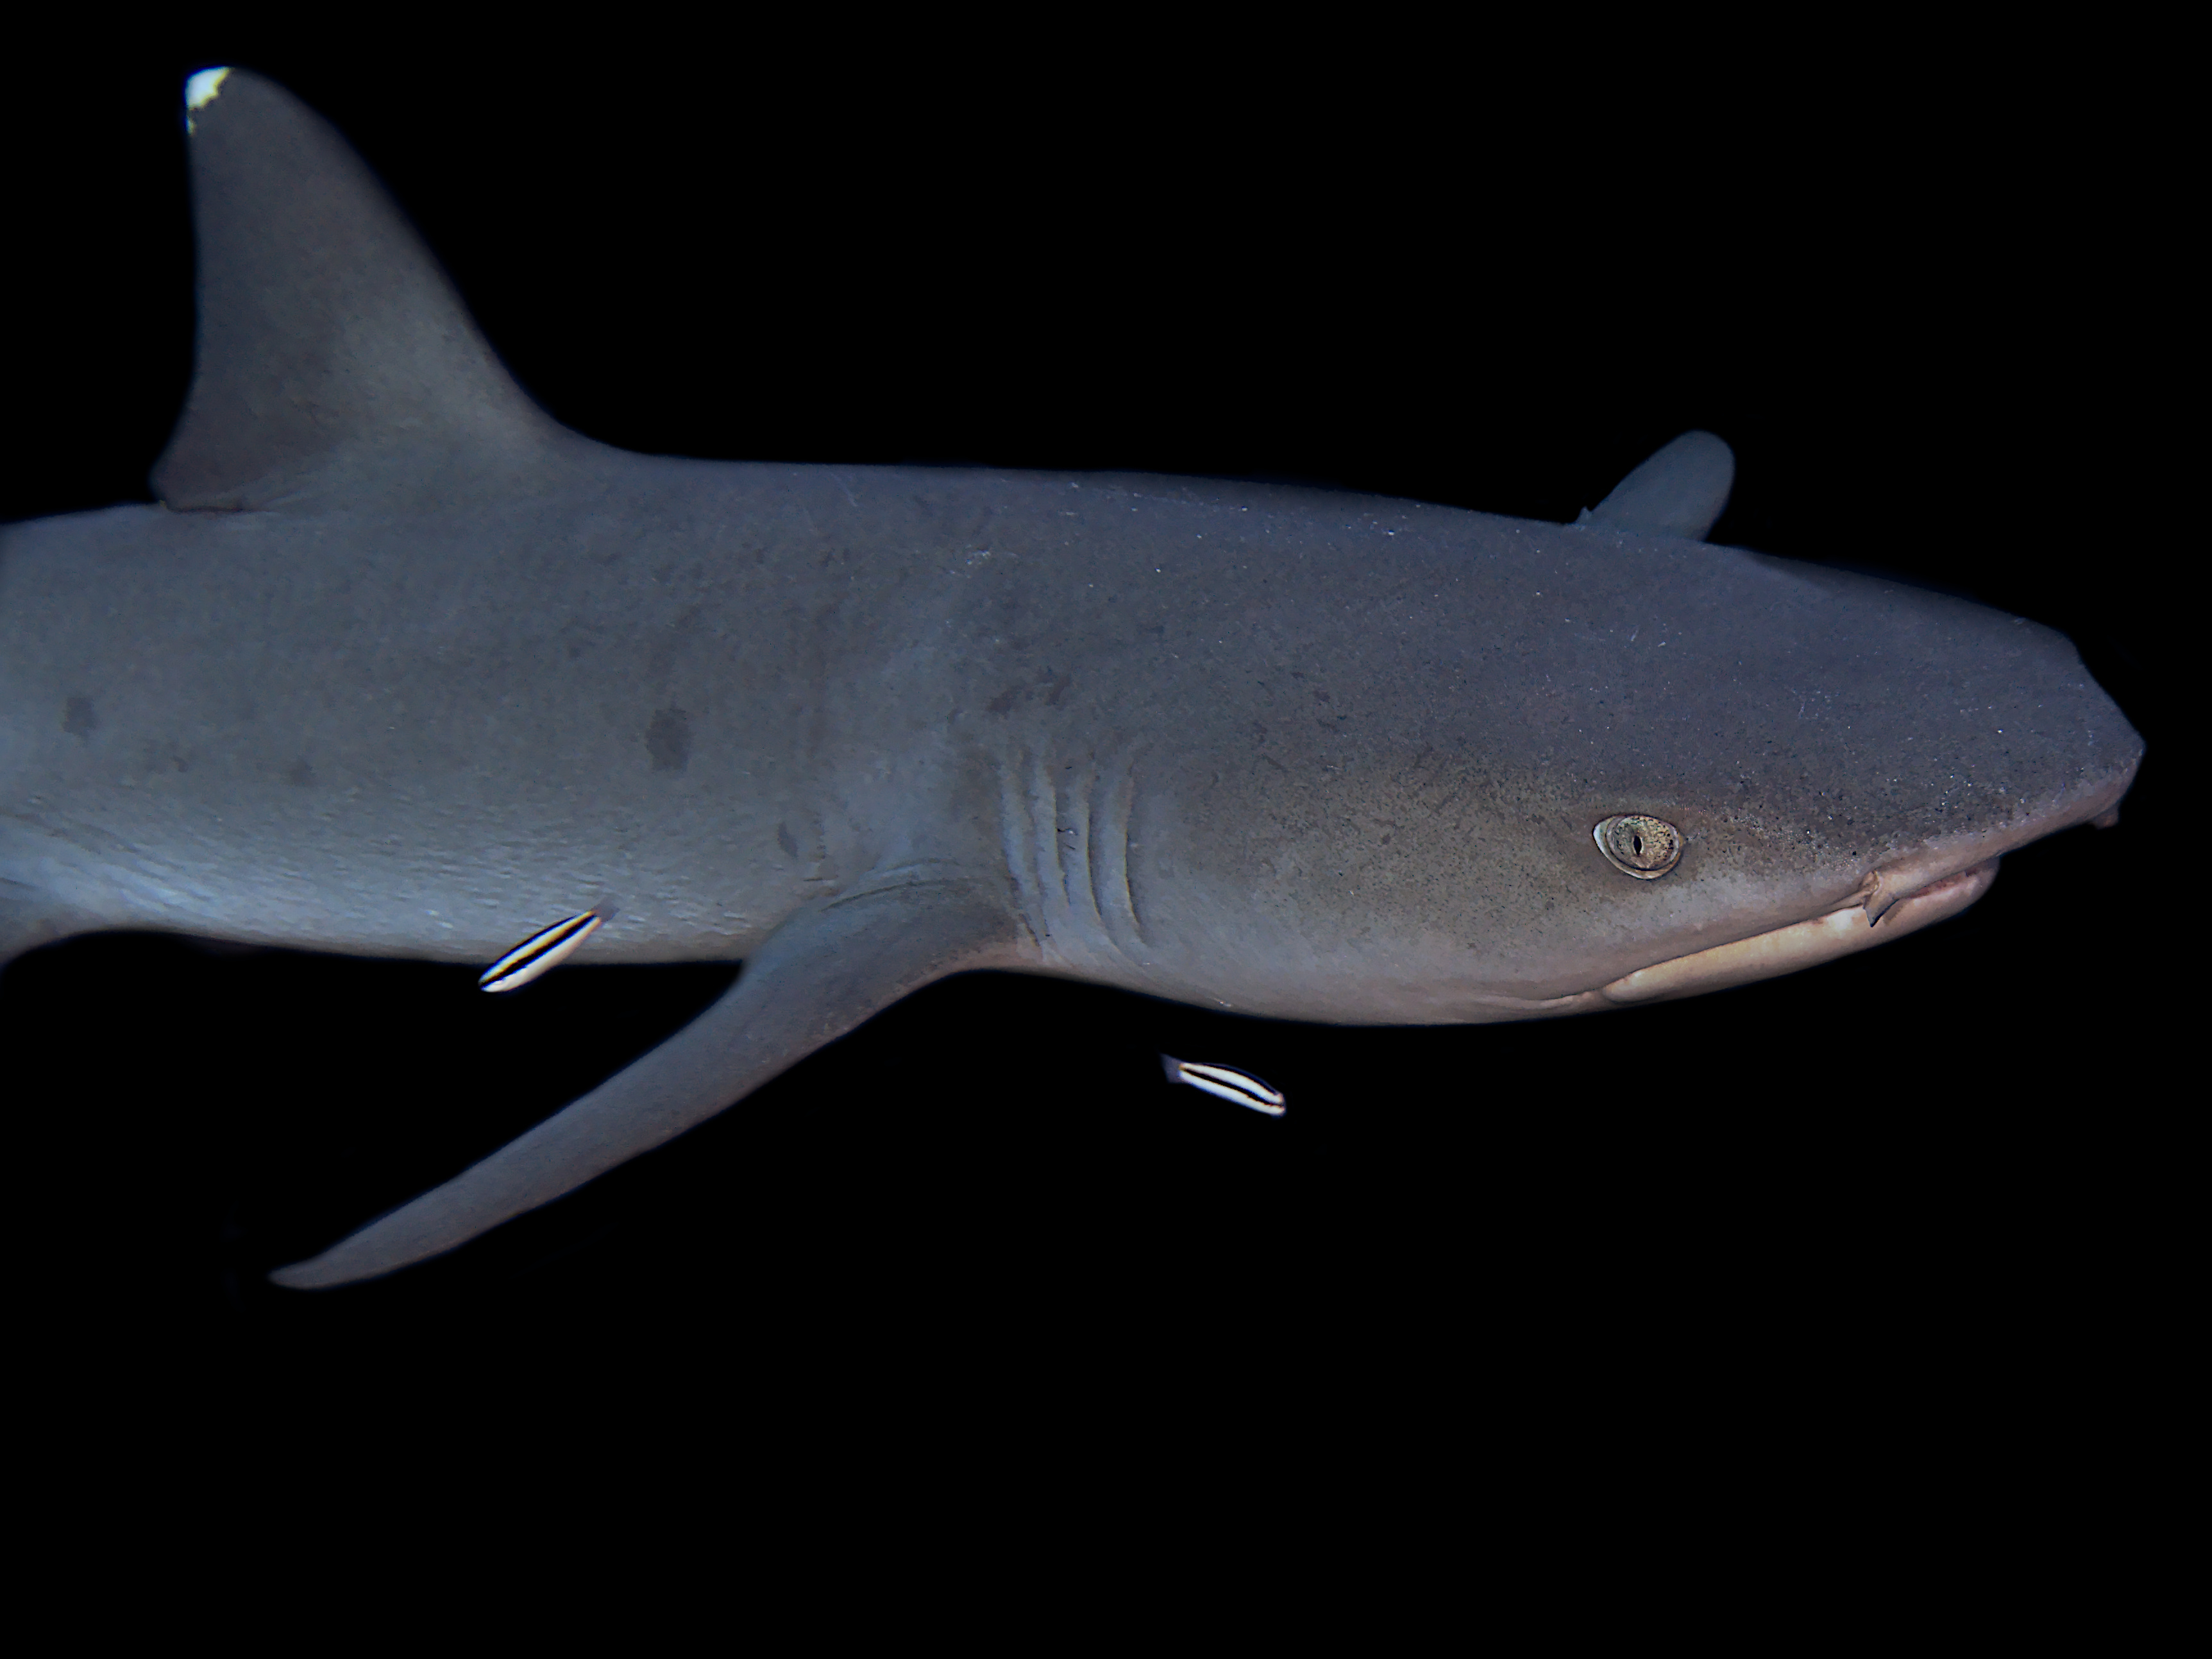 Whitetip Reef Shark - Triaenodon obesus